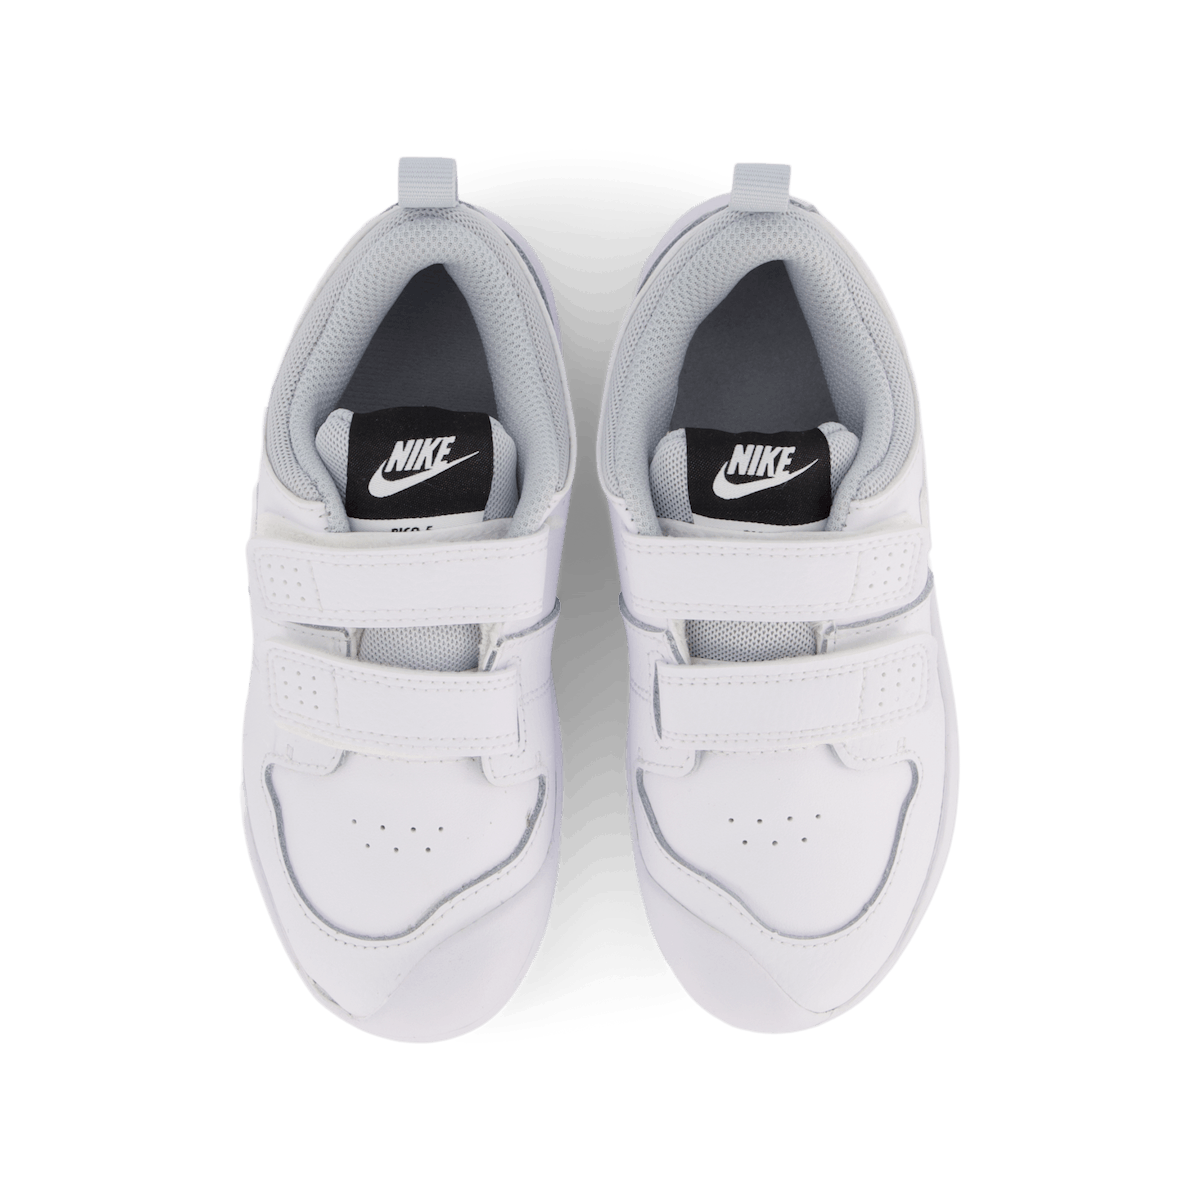 Pico 5 Infant/Toddler Shoes WHITE/WHITE-PURE PLATINUM